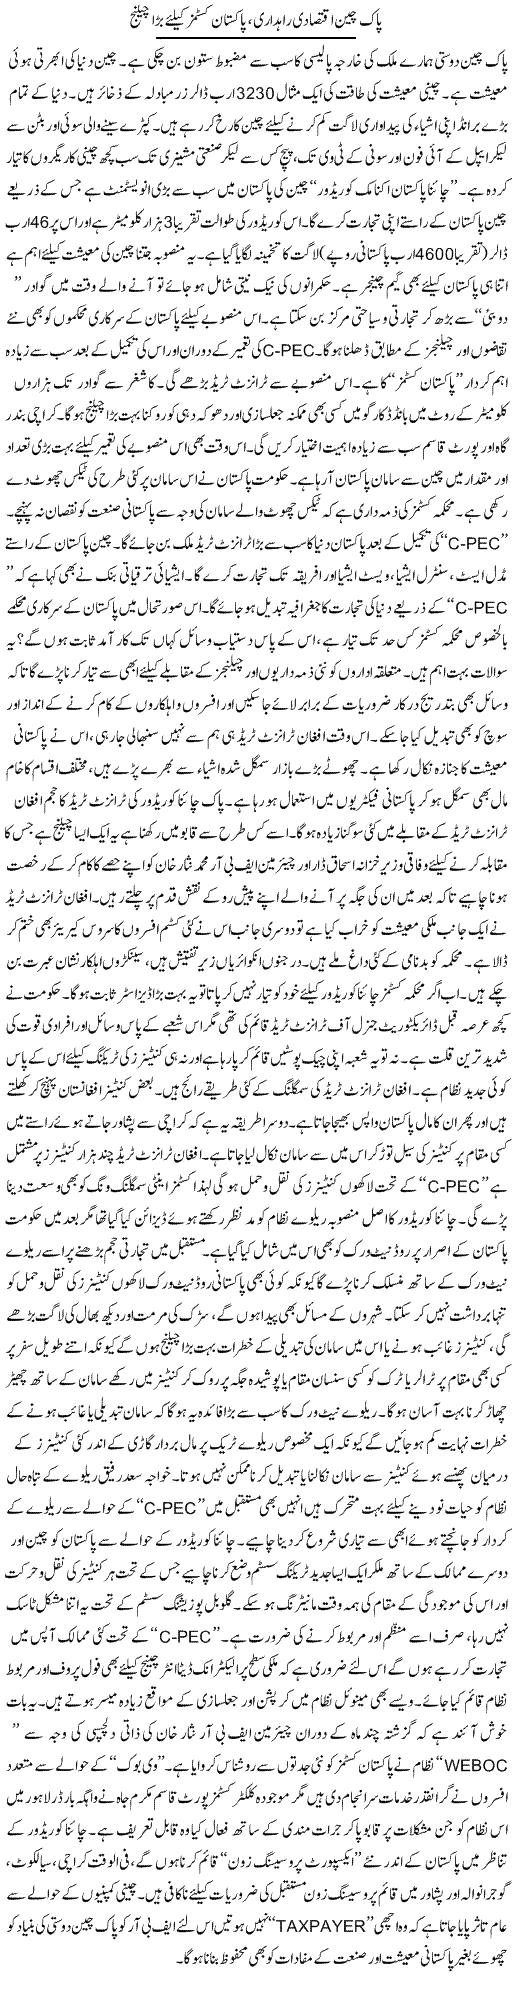 Pak China iqtesadi rahdari, Pakistan customs ke lye bara challenge | Rizwan Asif | Daily Urdu Columns